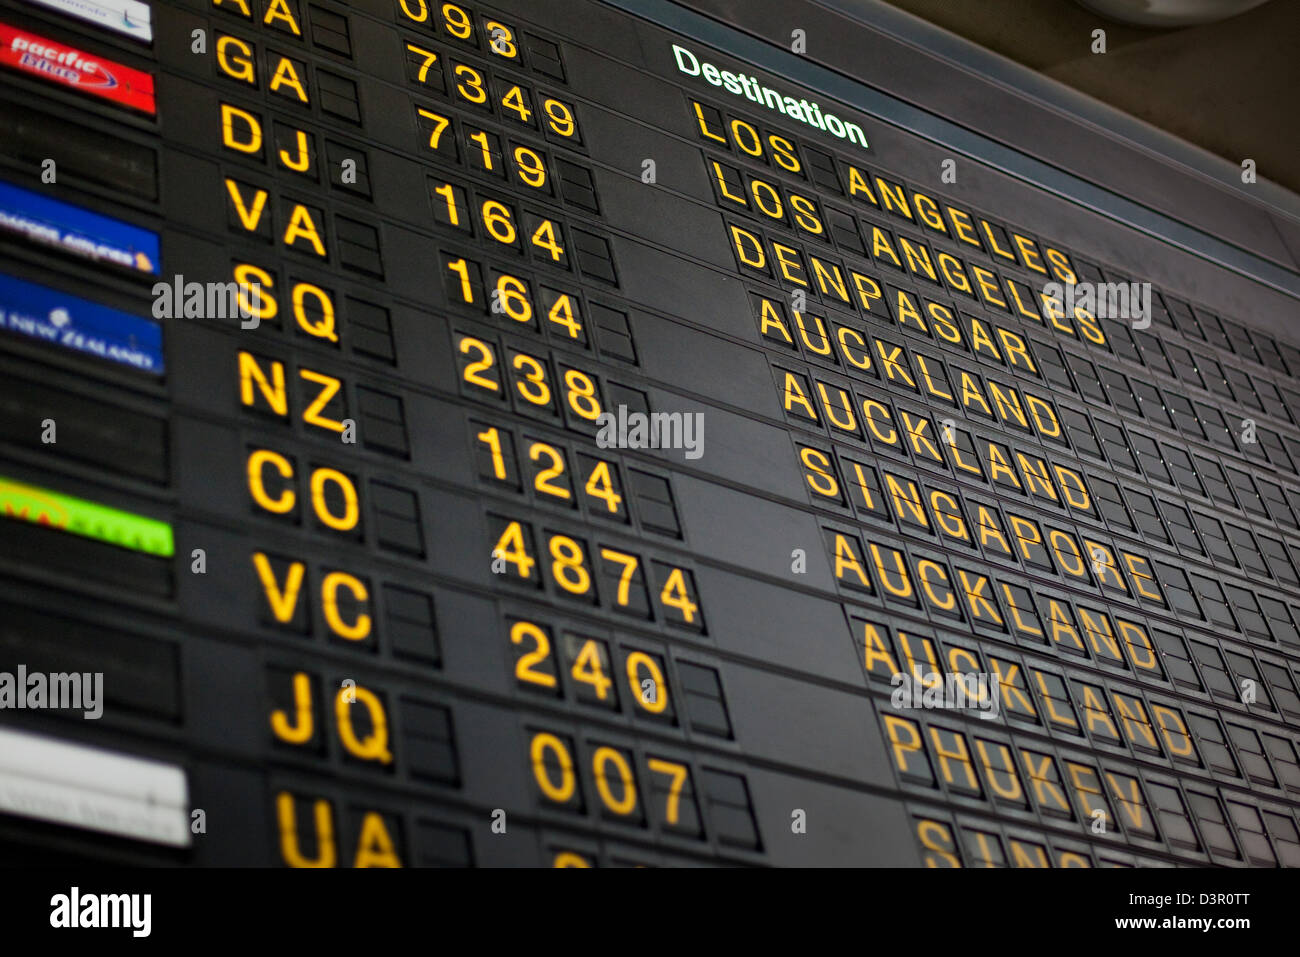 Flight departure board at international airport. Melbourne, Victoria, Australia Stock Photo